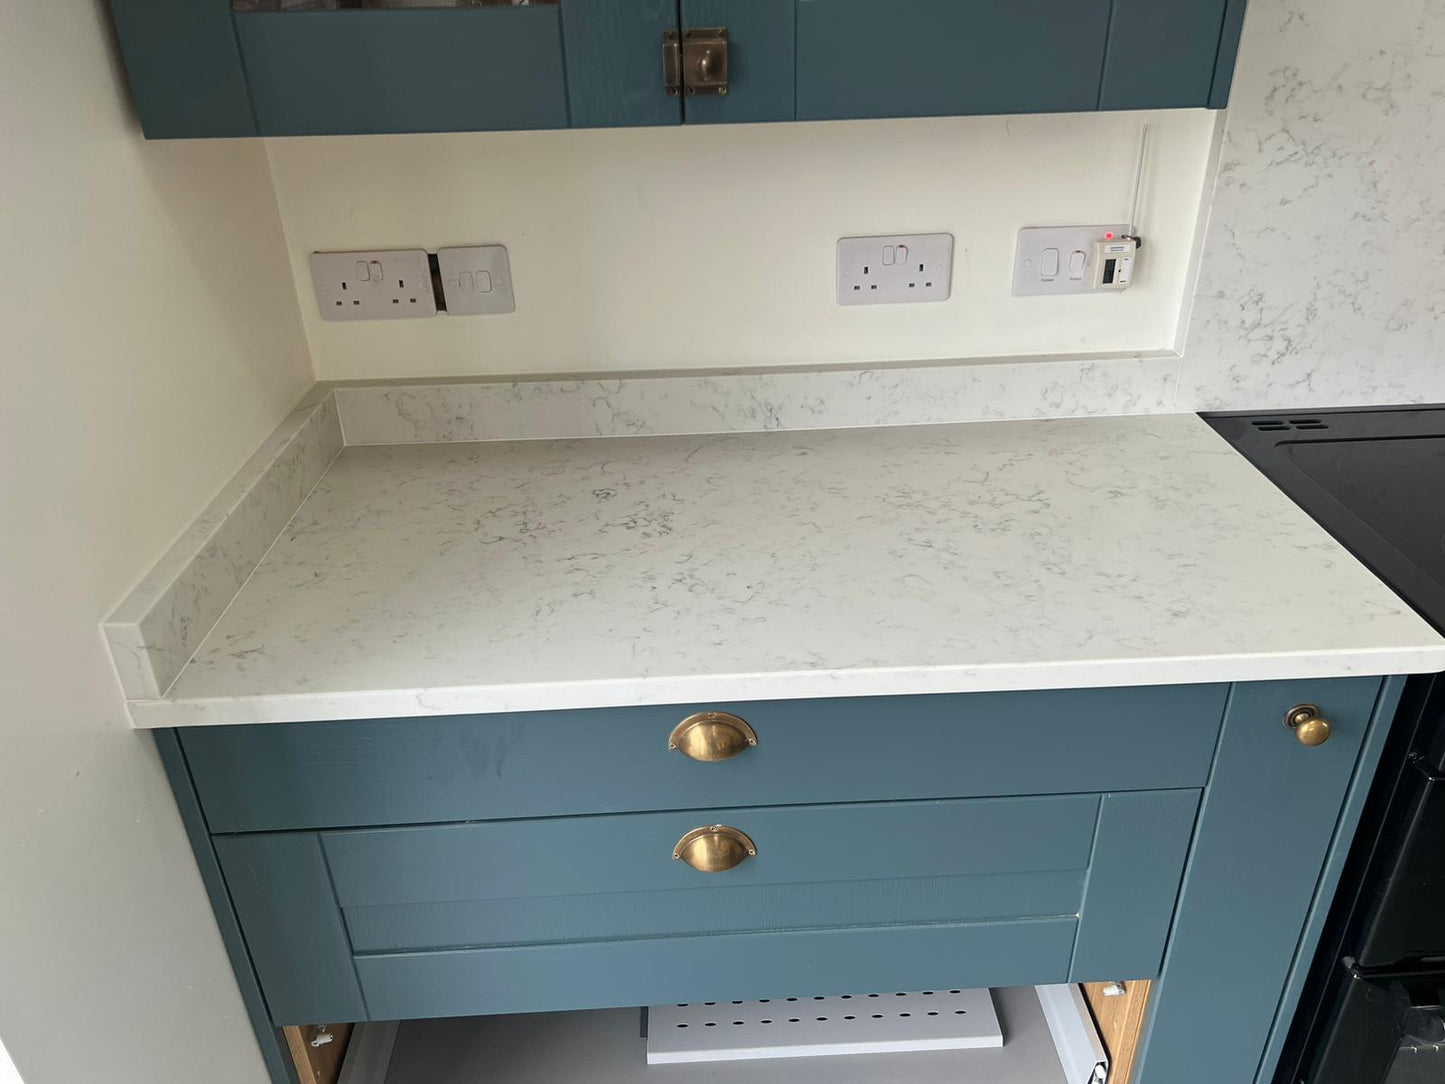 Carrara White quartz kitchen worktop with a soft white hue and smoky grey veins.